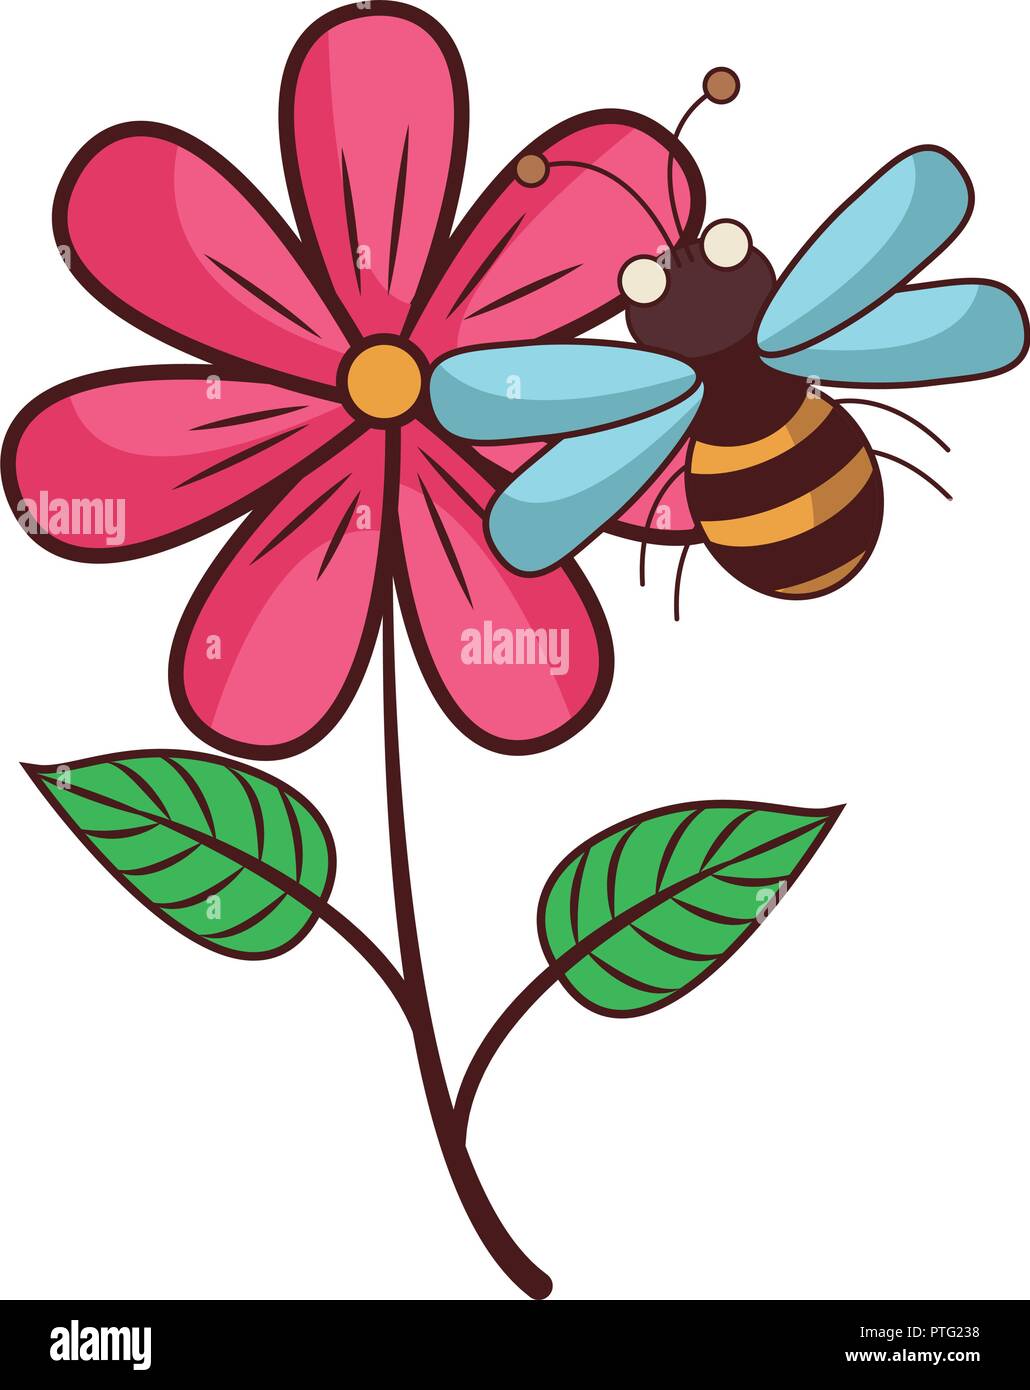 Blume Und Biene Cartoon Stock Vektorgrafik Alamy